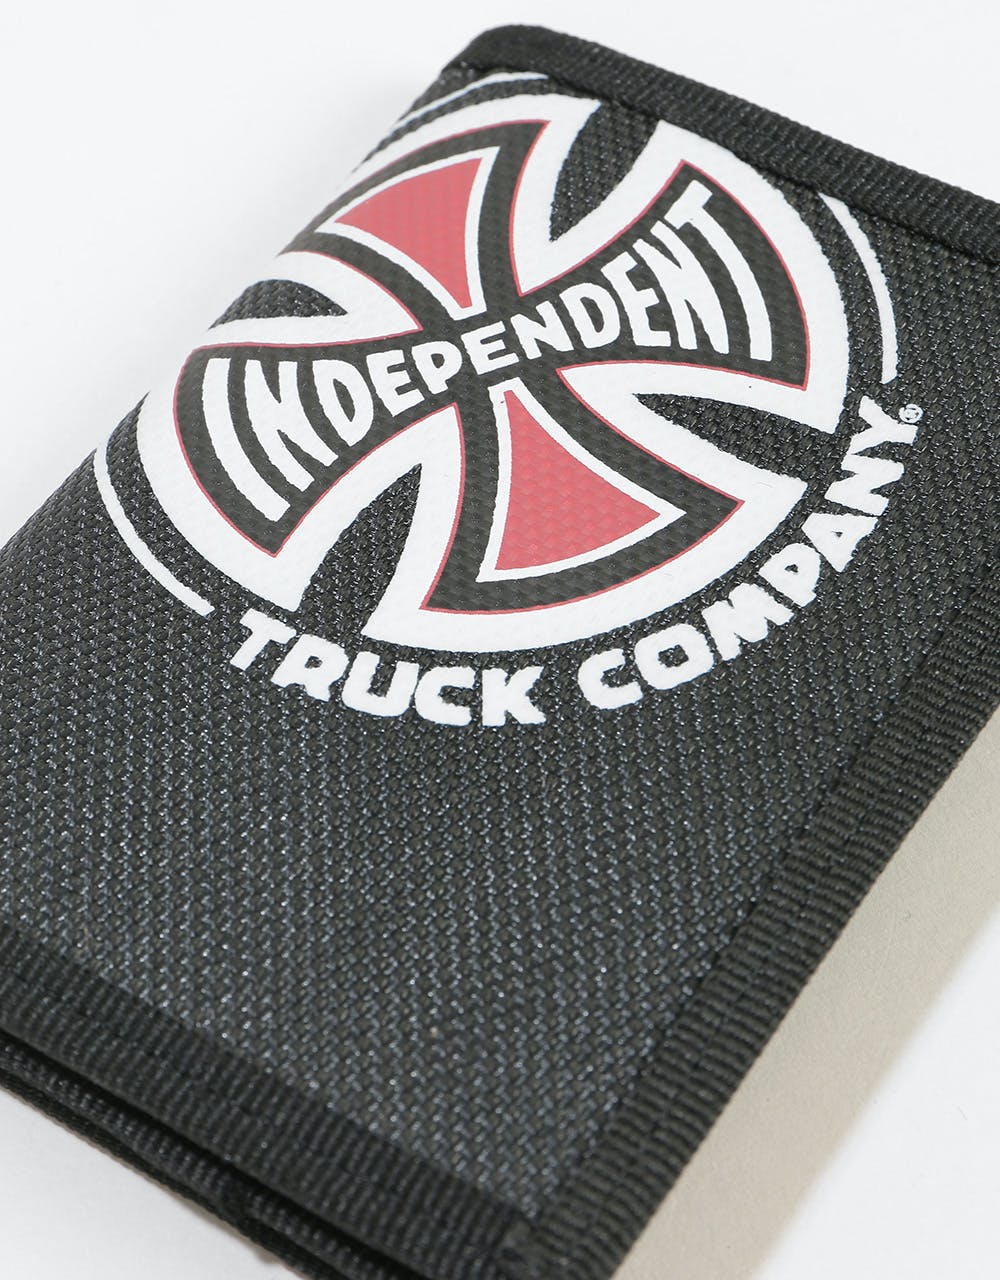 Independent Truck Co Wallet - Black